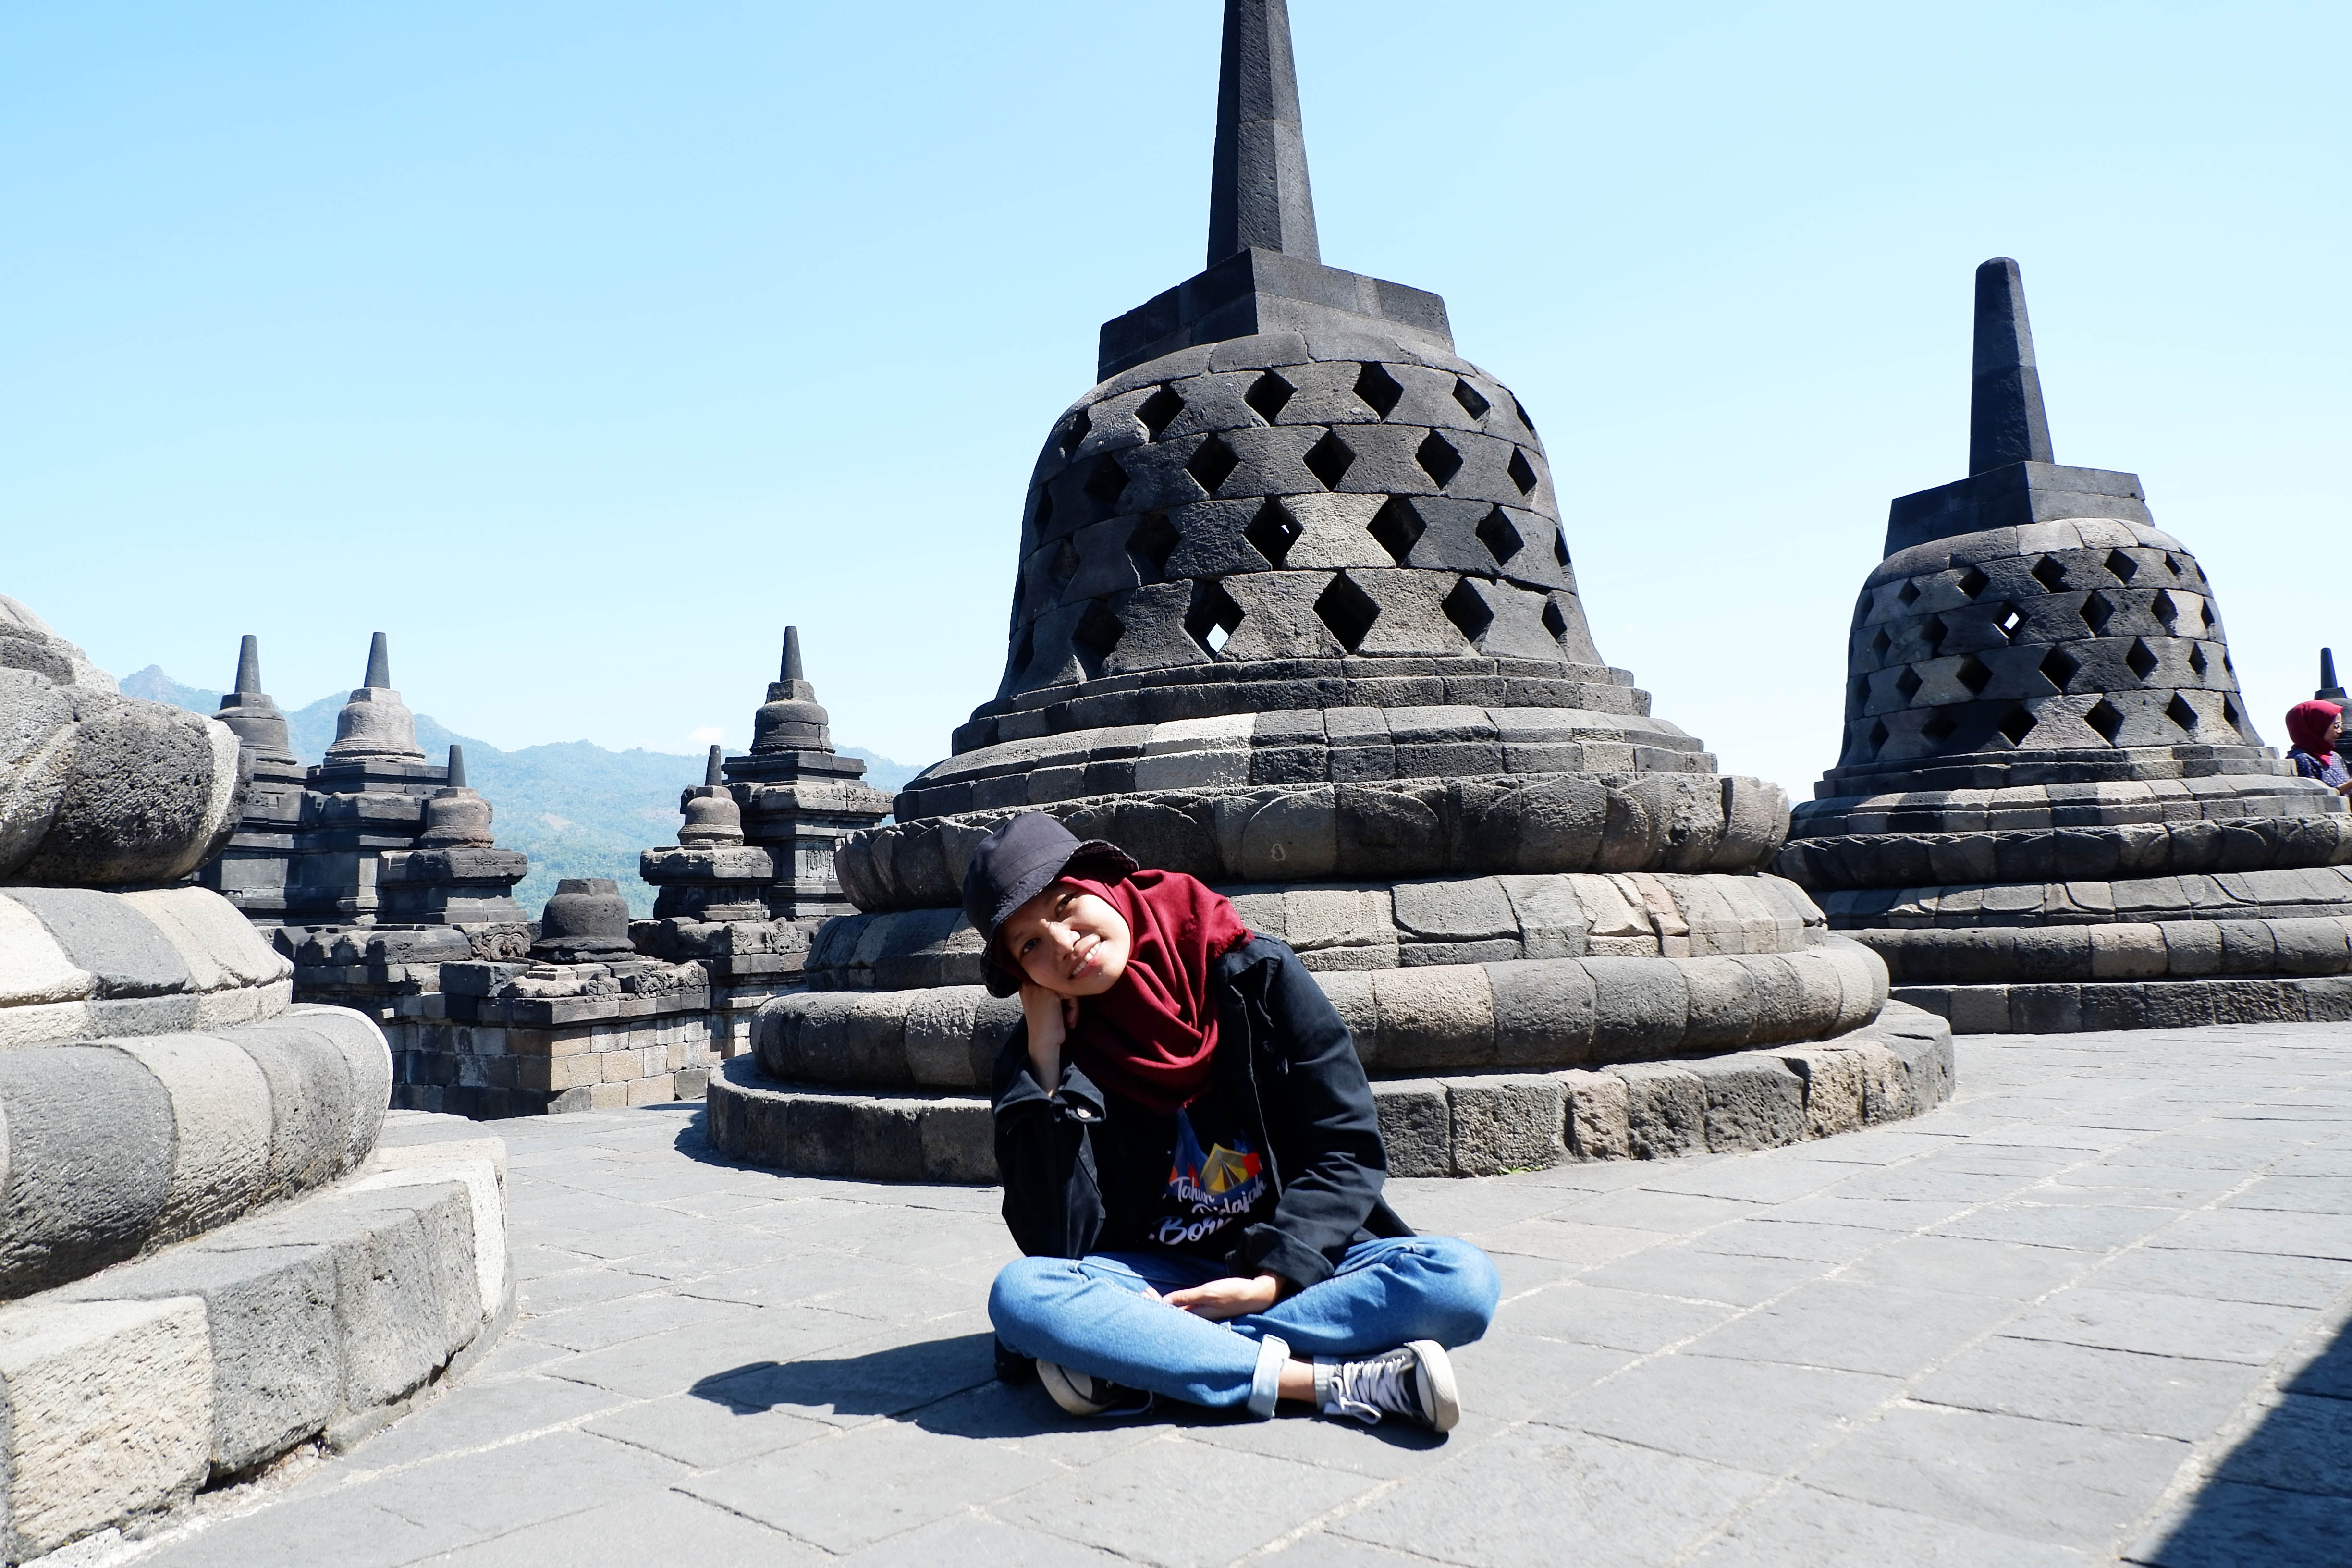 Candi Borobudur, Magelang, Jawa Tengah